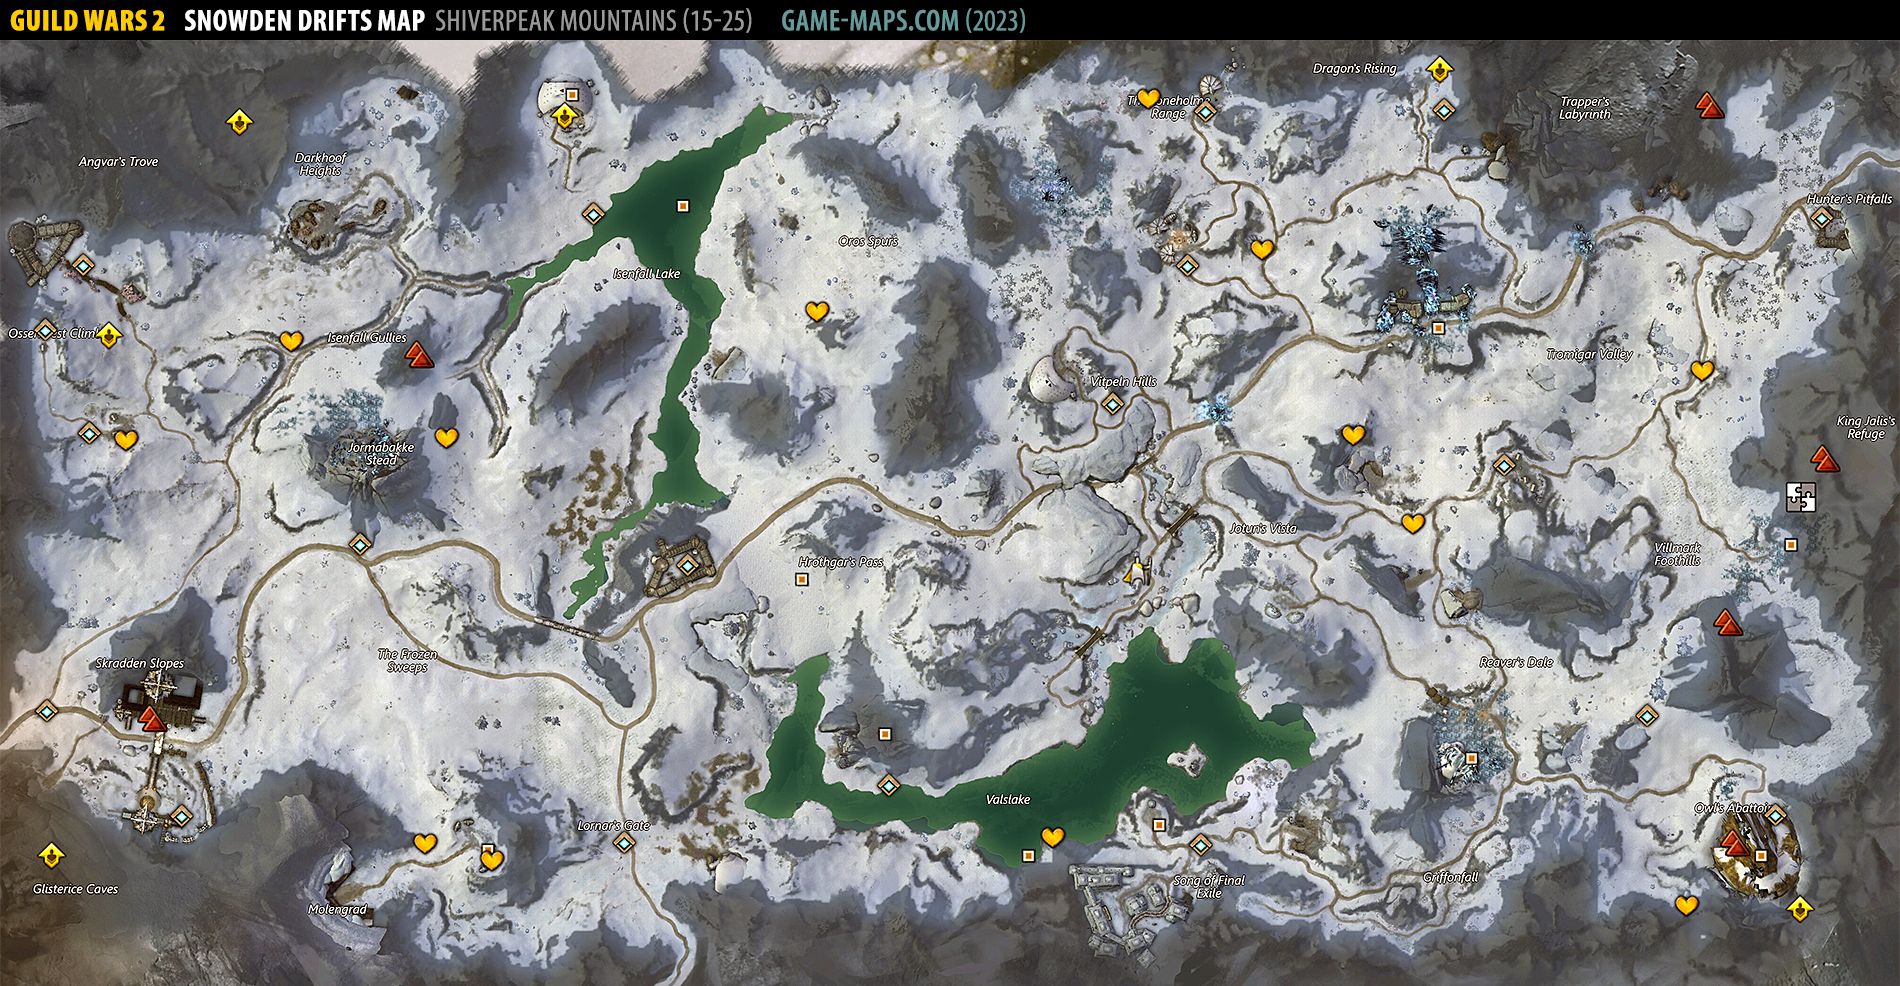 Snowden Drifts Map Guild Wars 2